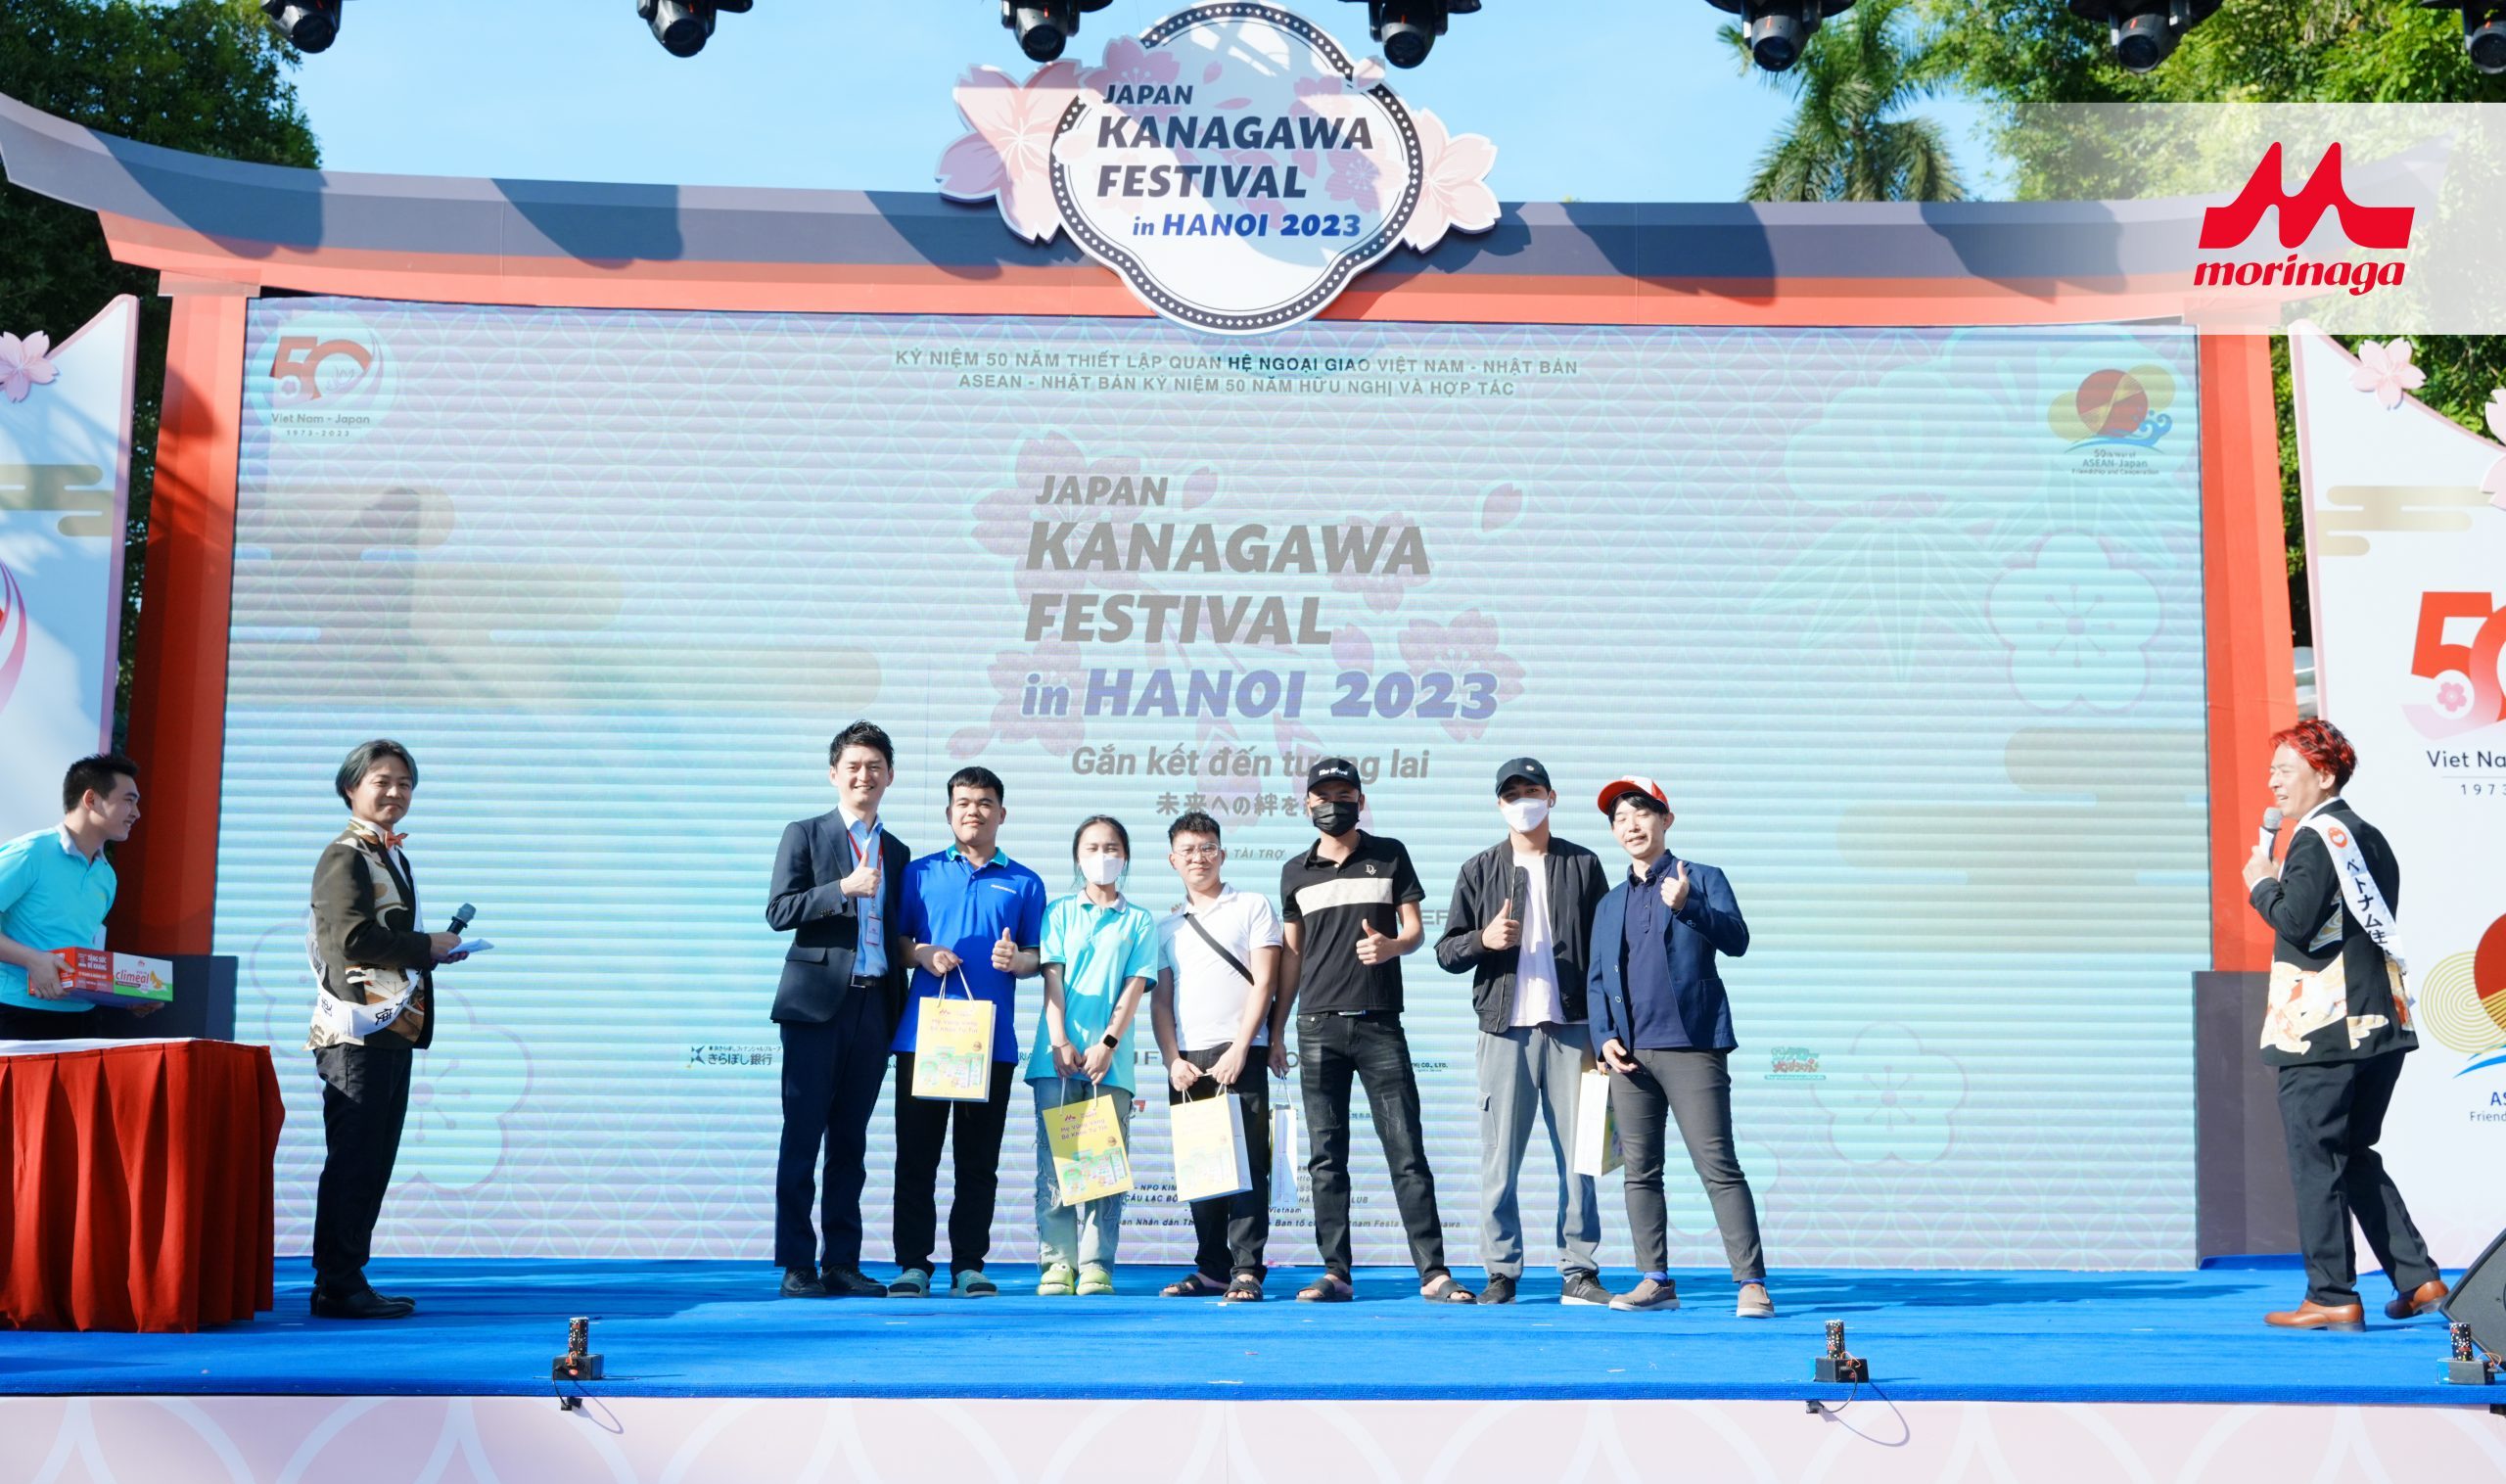 Elovi Vietnam Takes Part in Kanagawa Festival in Hanoi 2023